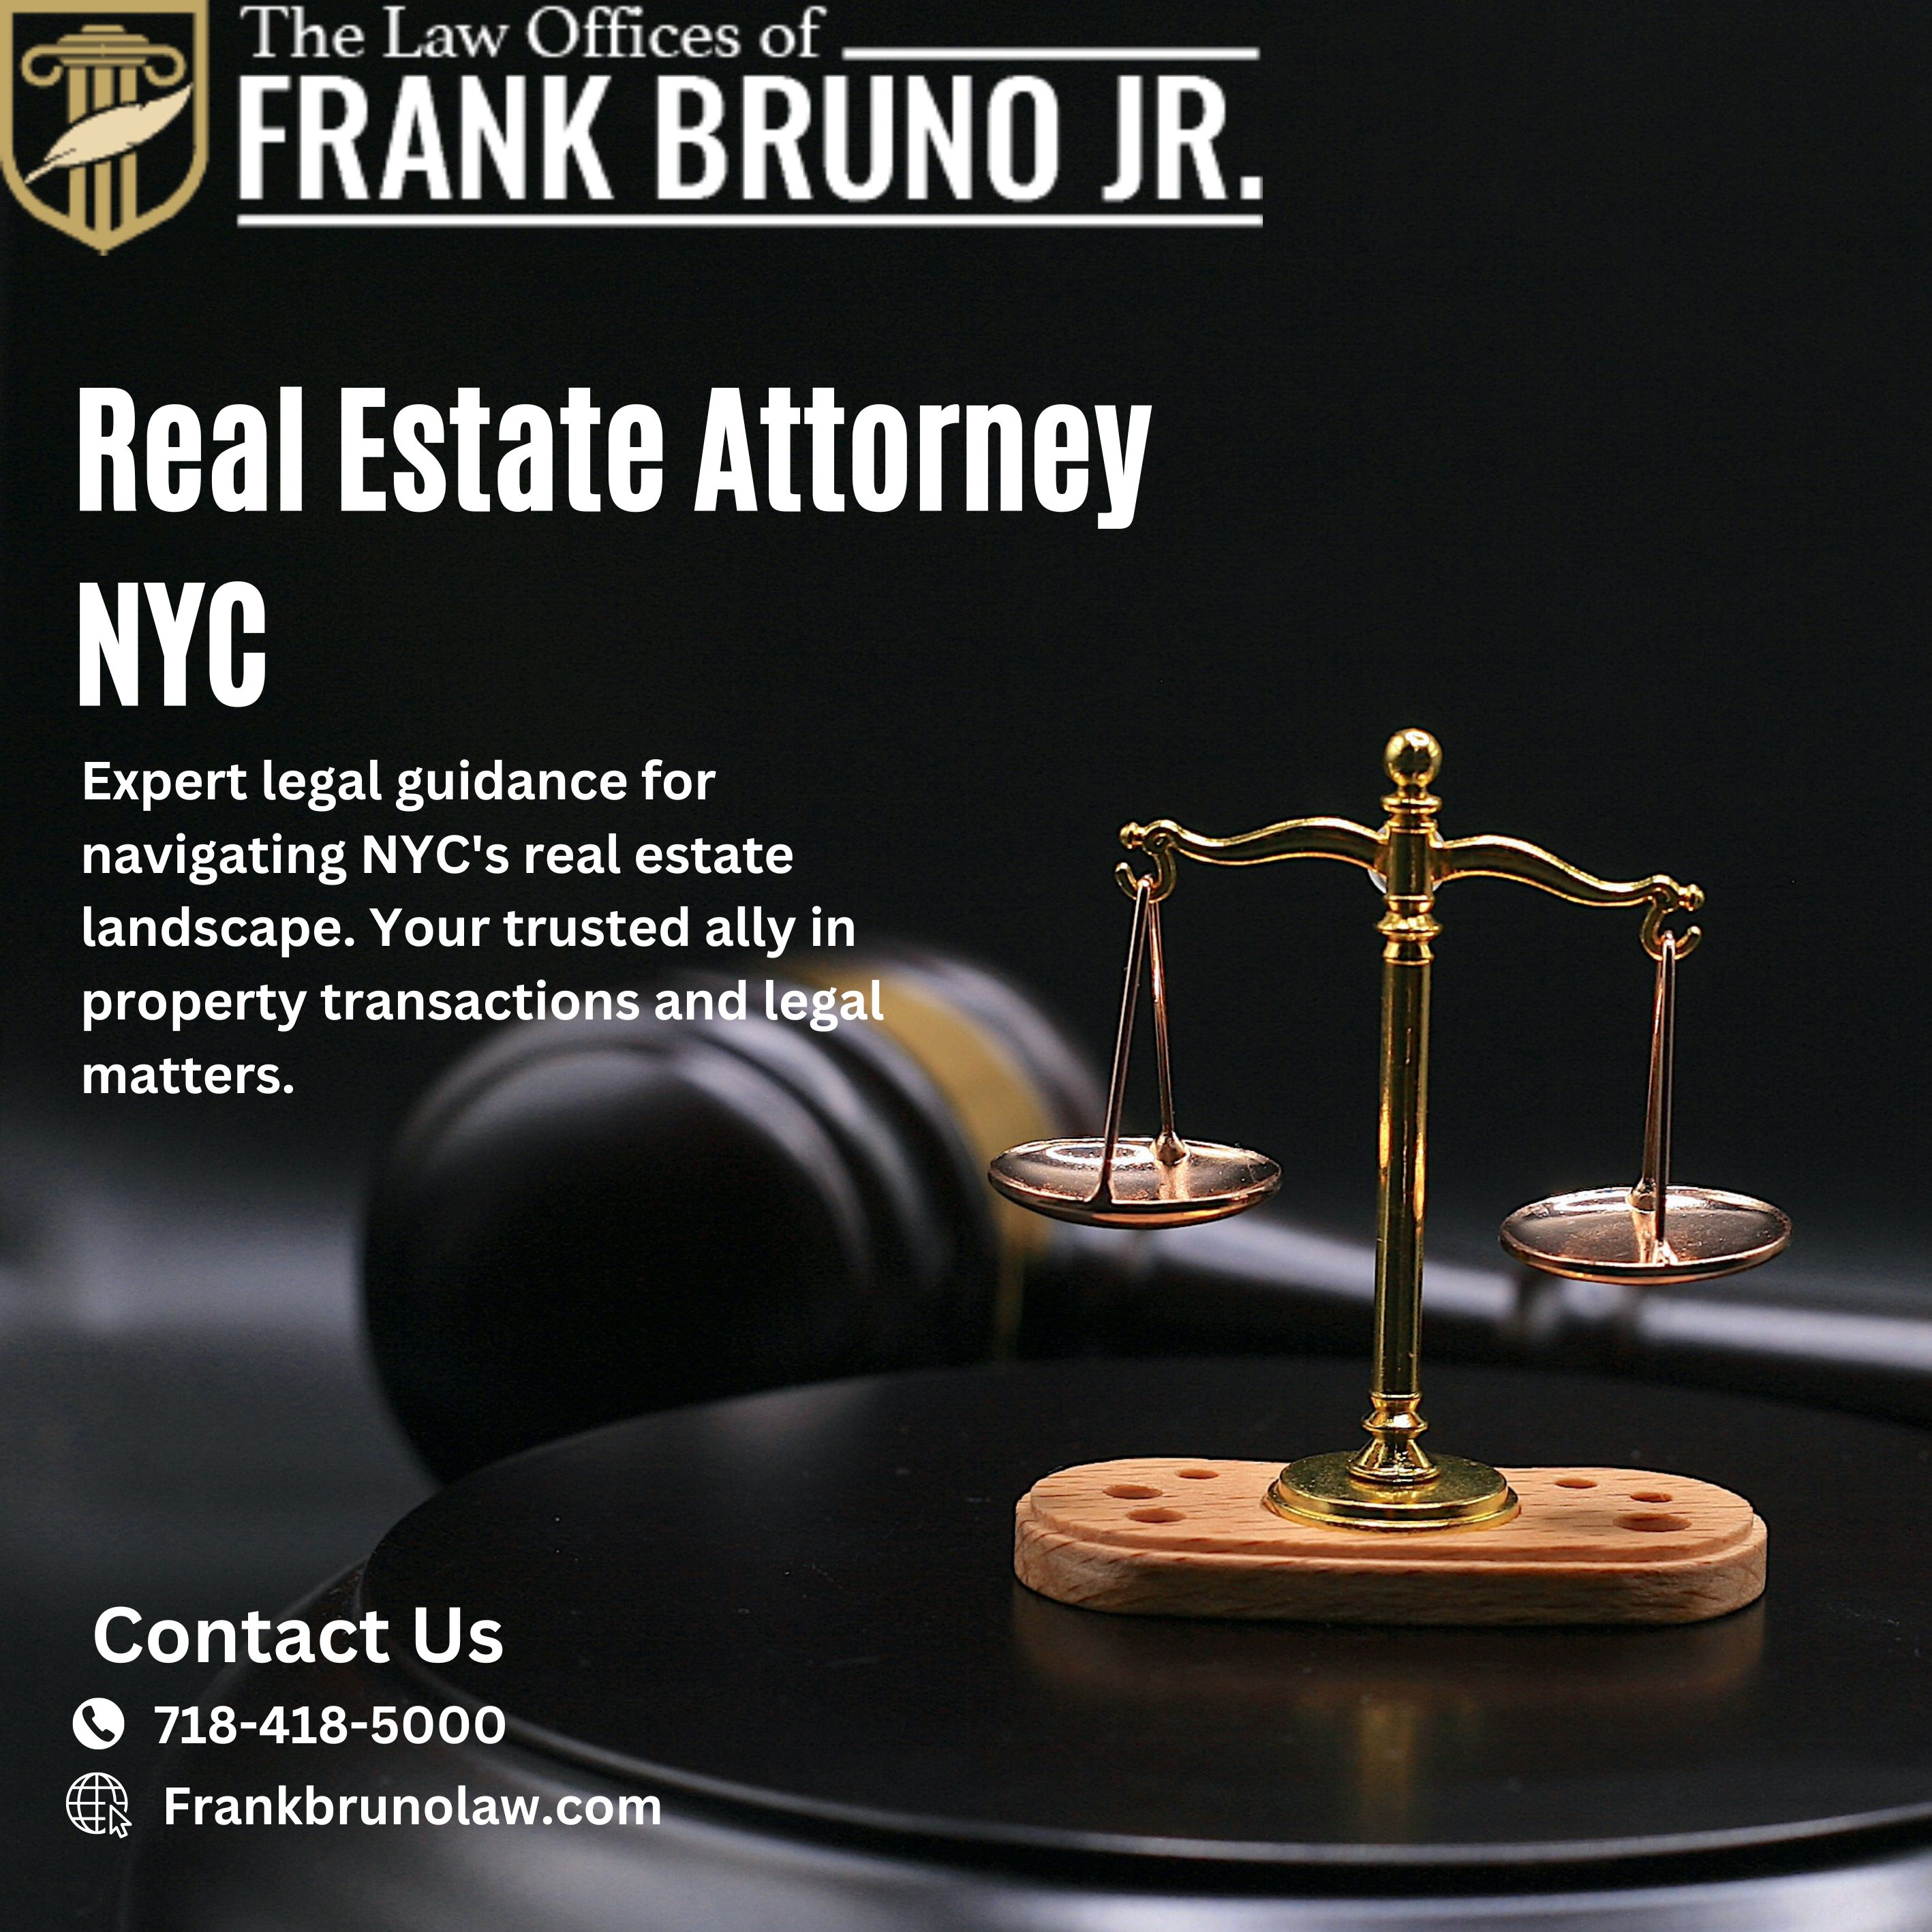 Real Estate Attorney NYC - New York - New York ID1559768 4